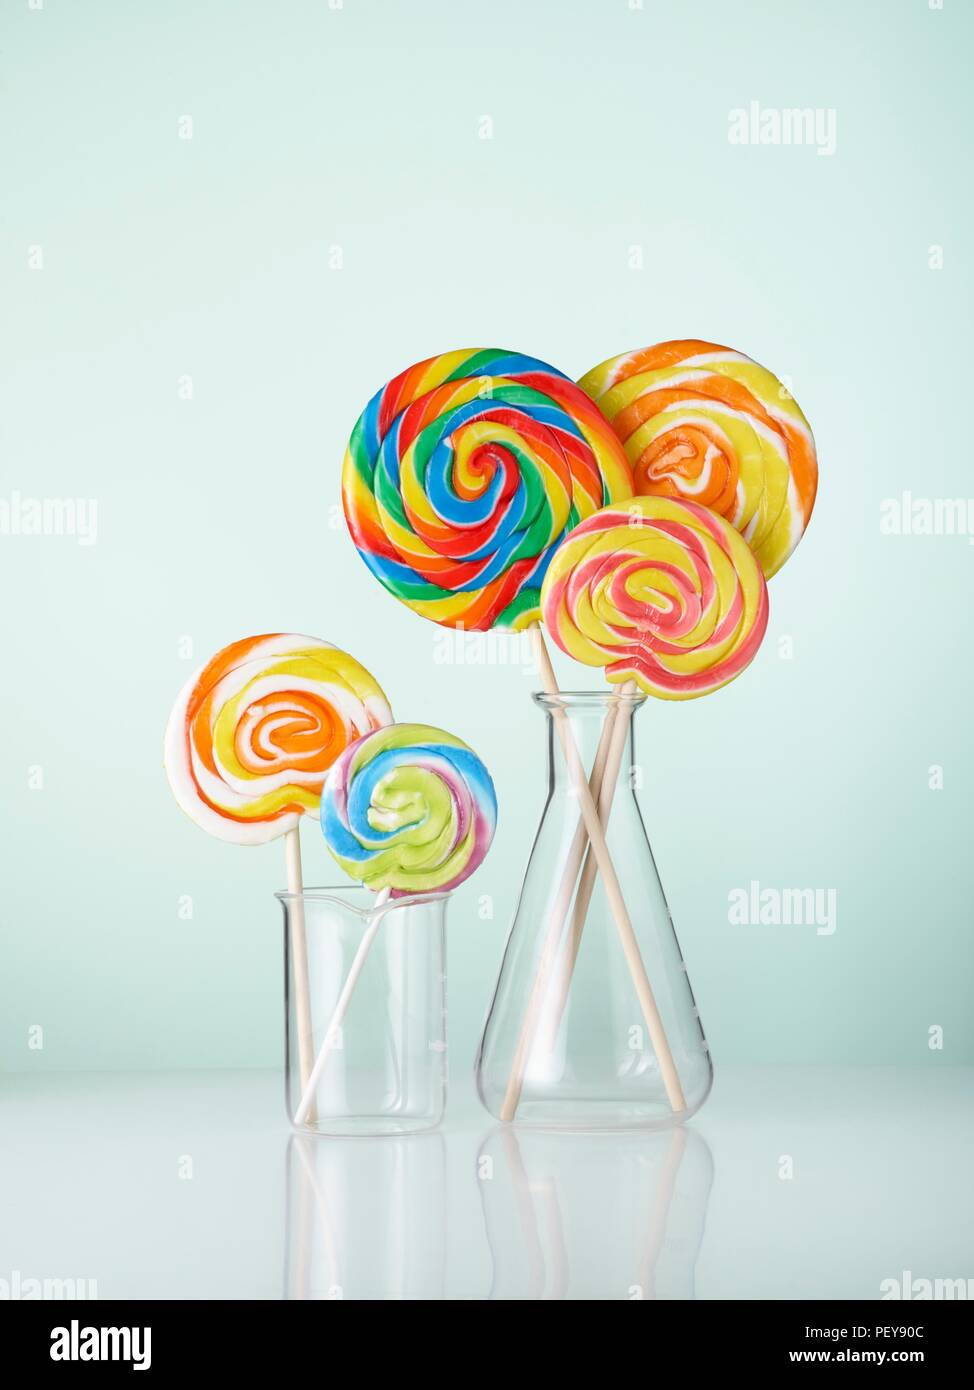 Laboratory glassware with lollipops. Stock Photo